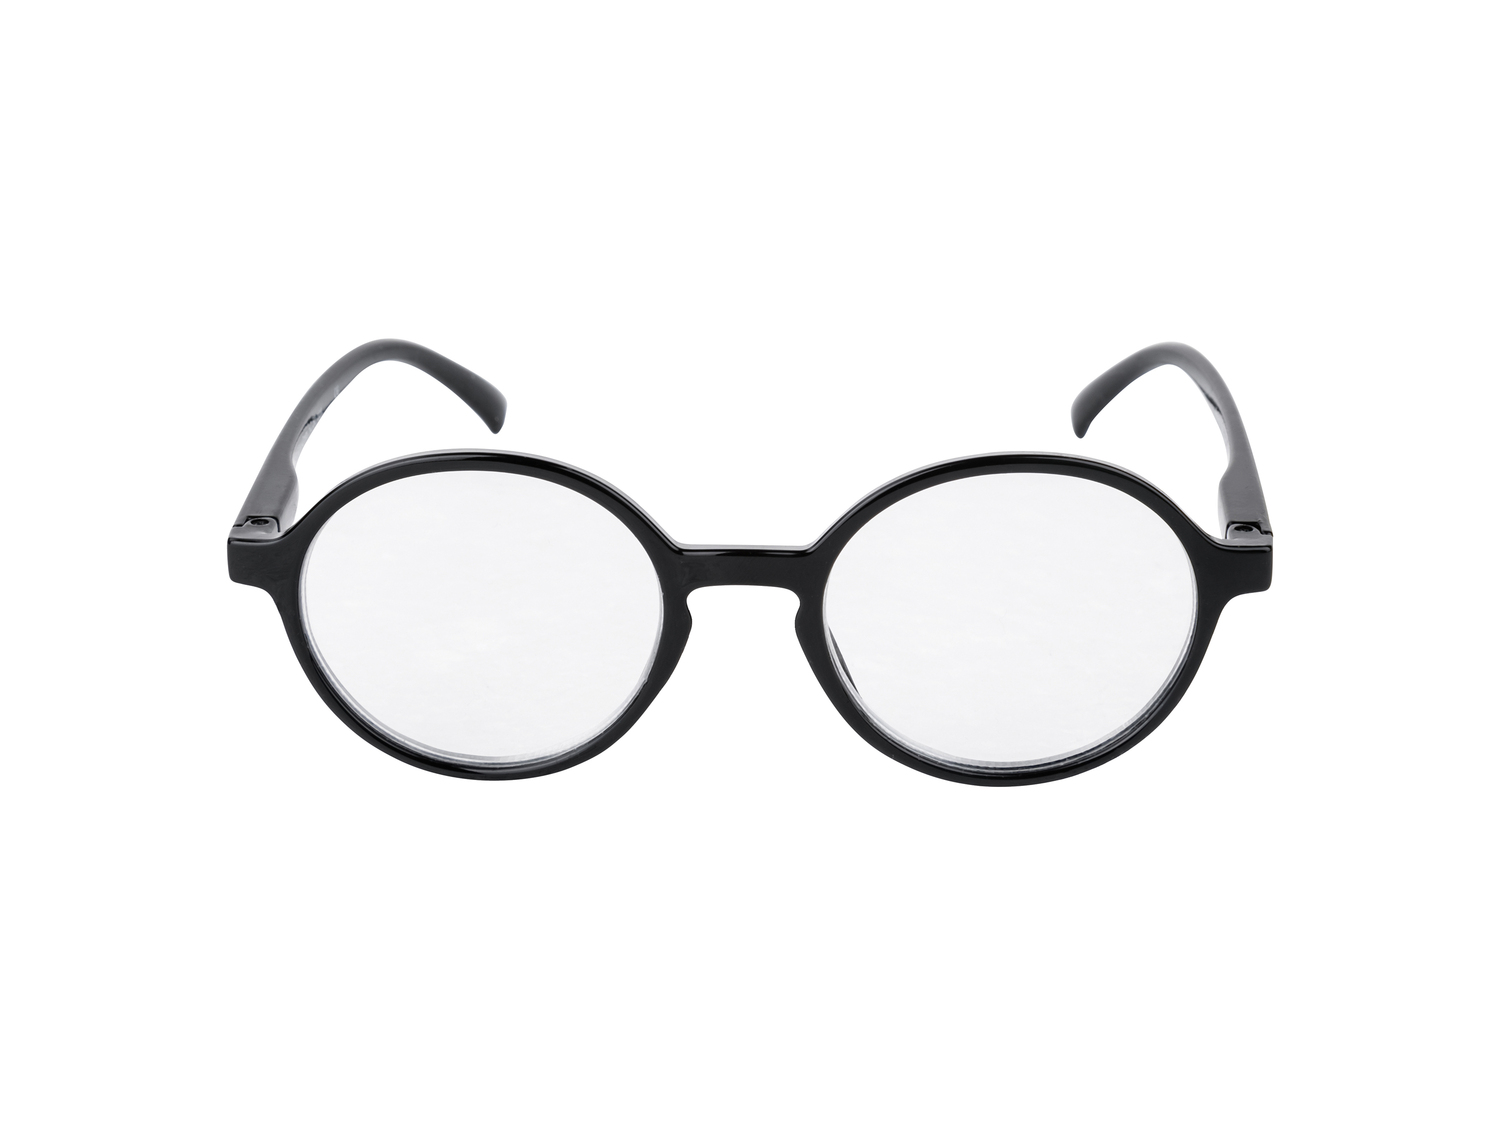 Occhiali da lettura Auriol Eyewear, prezzo 3.99 € 
- Distanza interpupillare: ...